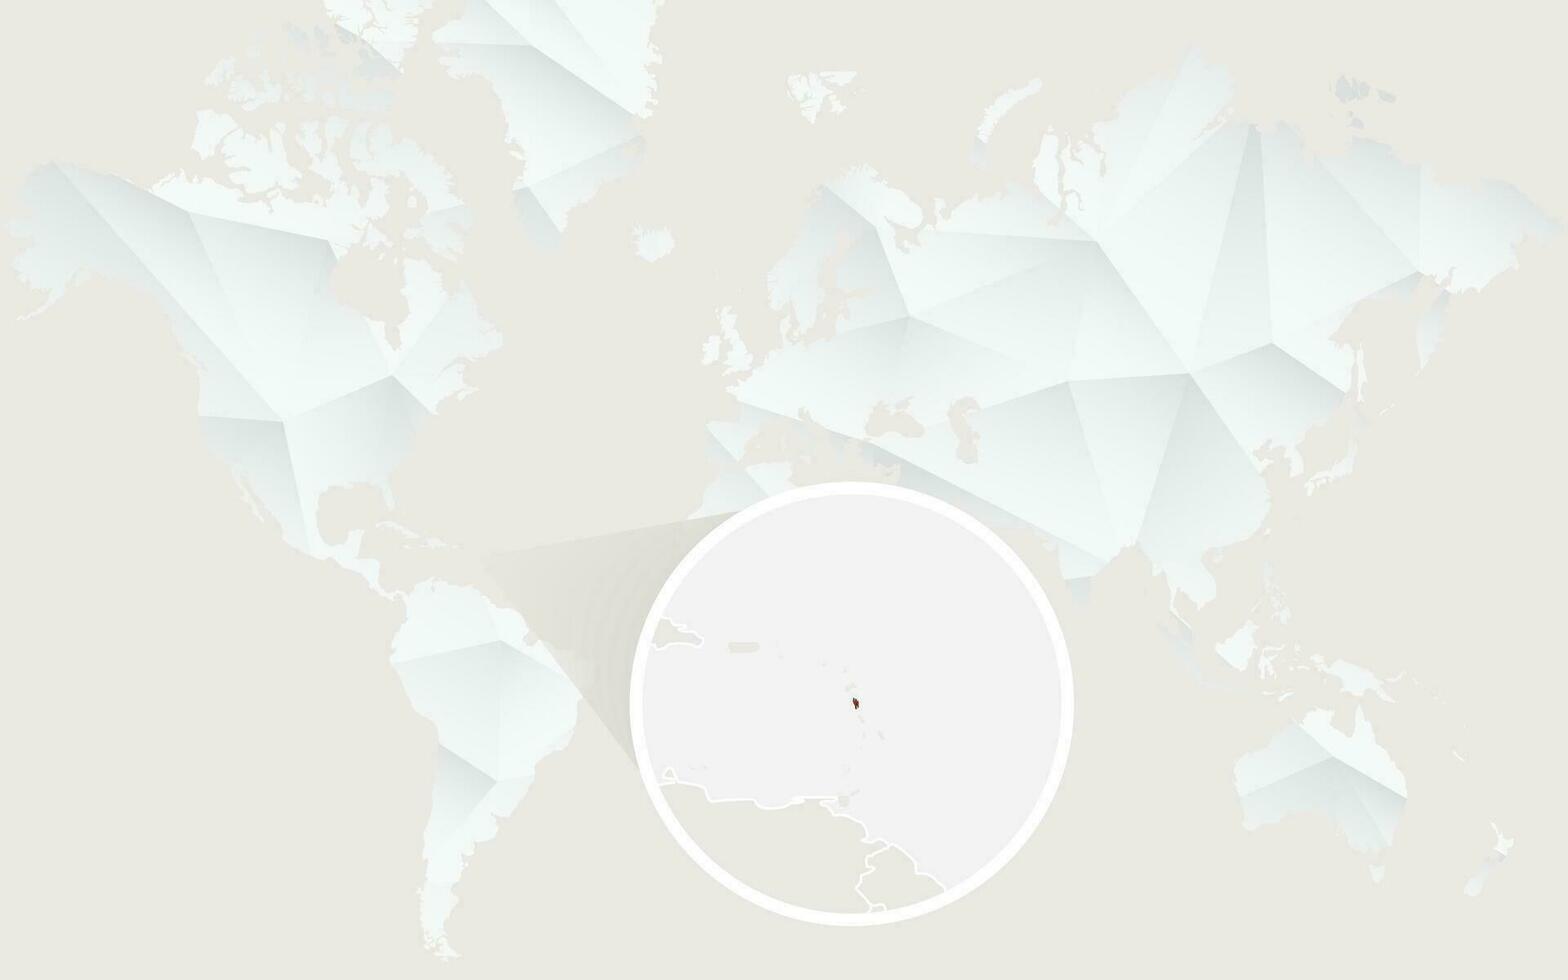 dominica mapa con bandera en contorno en blanco poligonal mundo mapa. vector